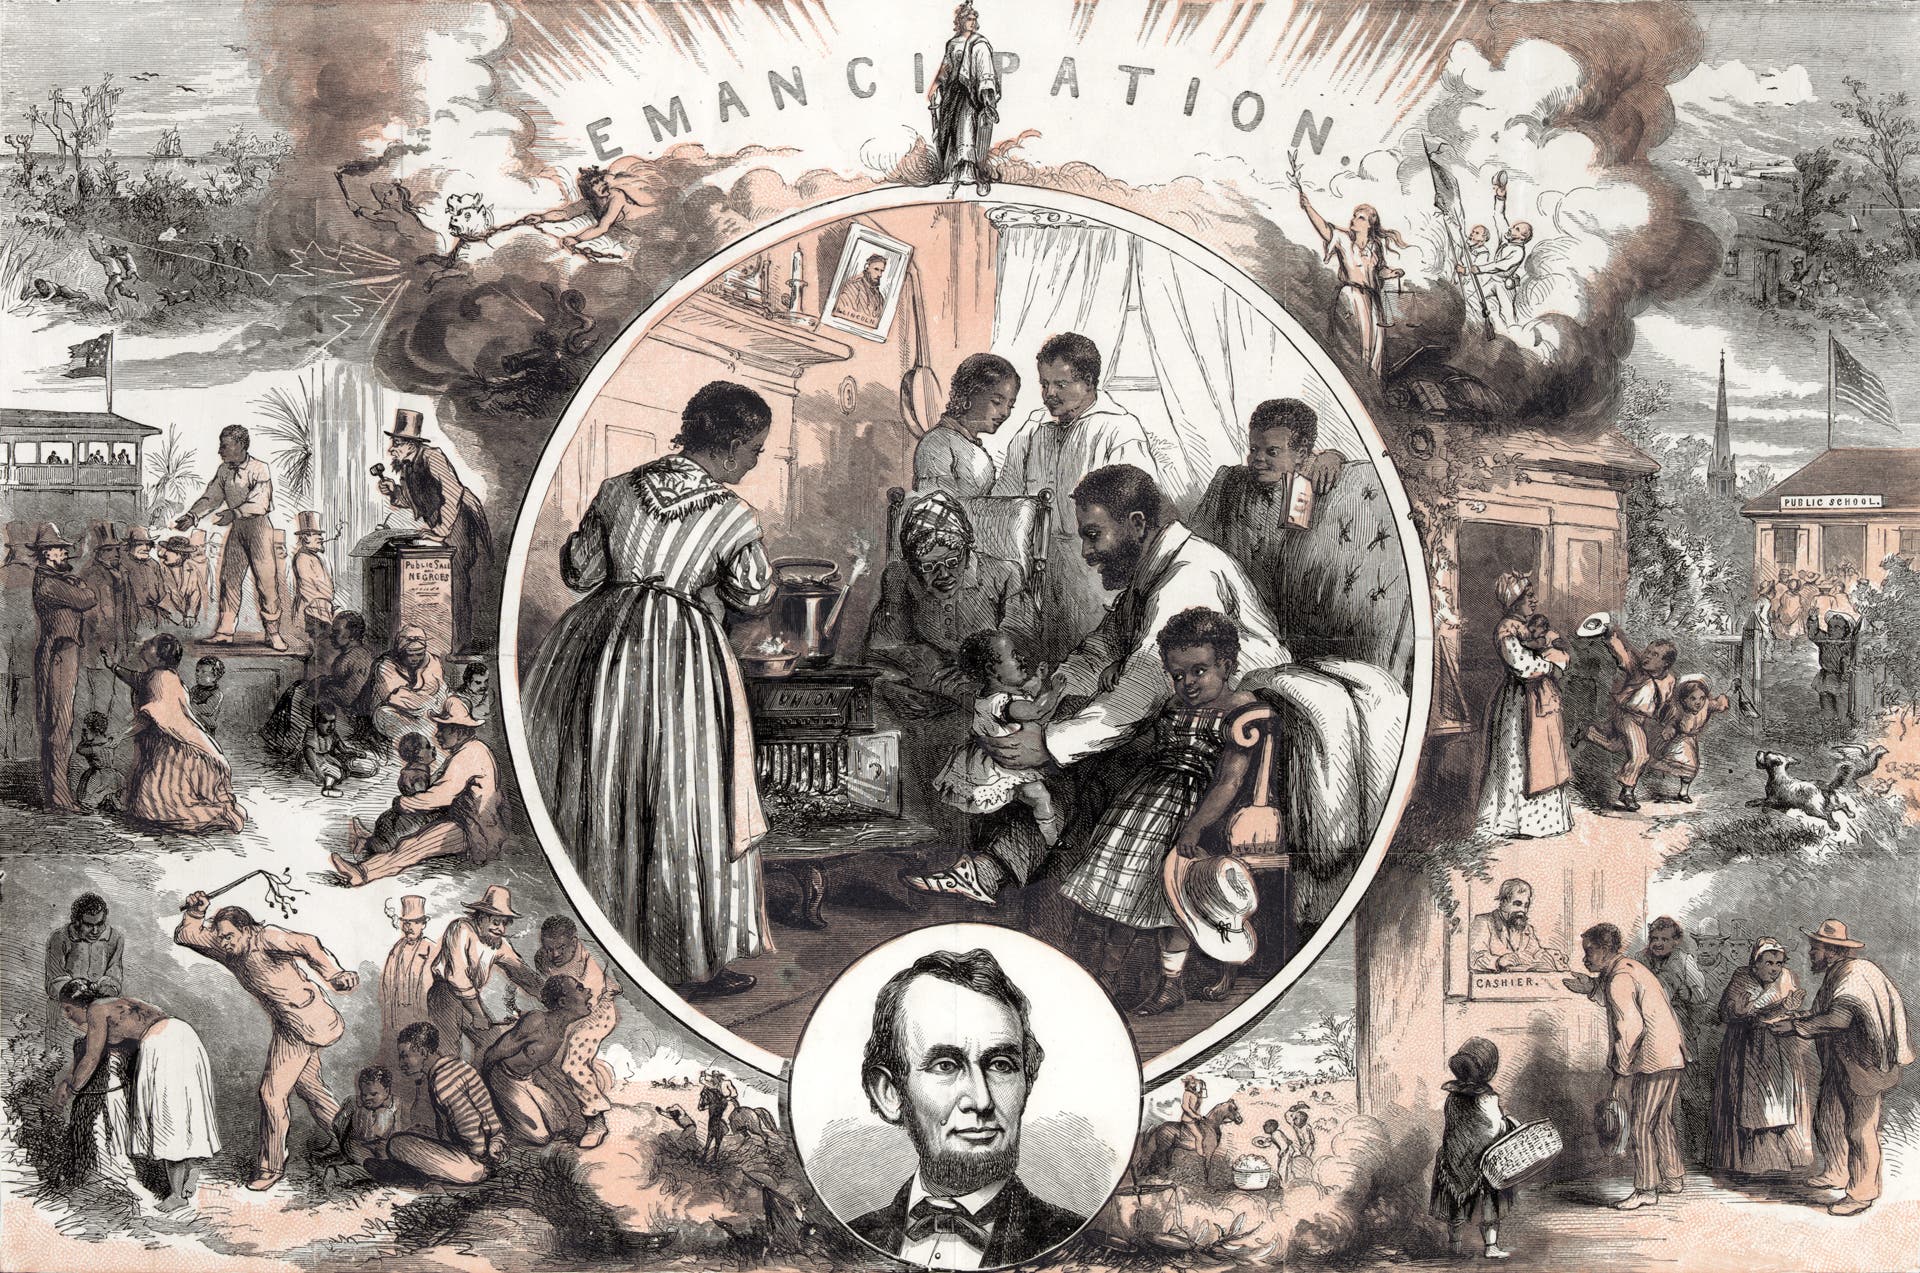 emancipation of Blacks in America